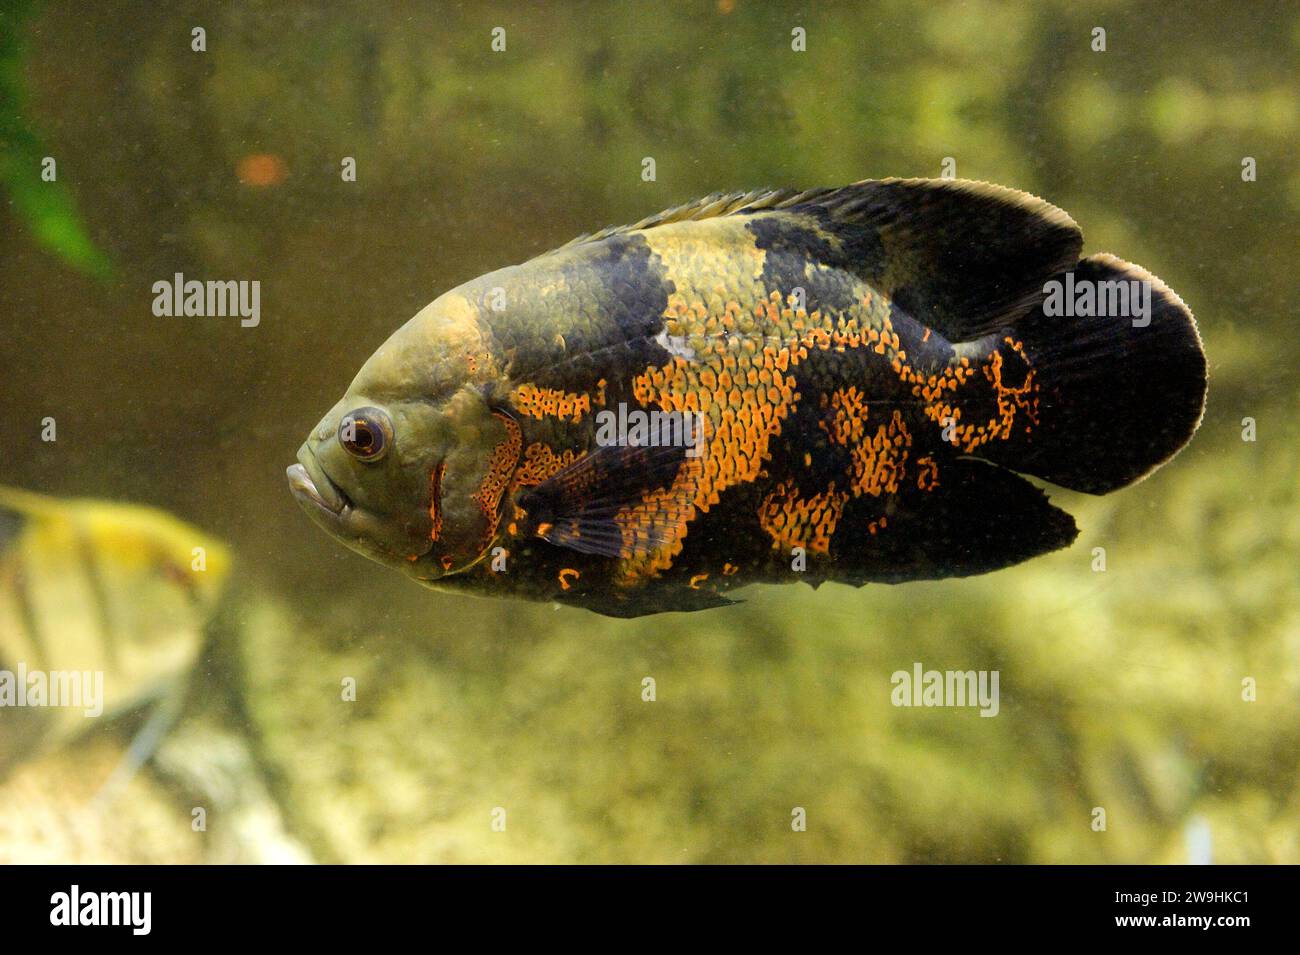 Oscar or tiger oscar (Astronotus ocellatus) is a fresh water fish native to Amazon River basin. Stock Photo